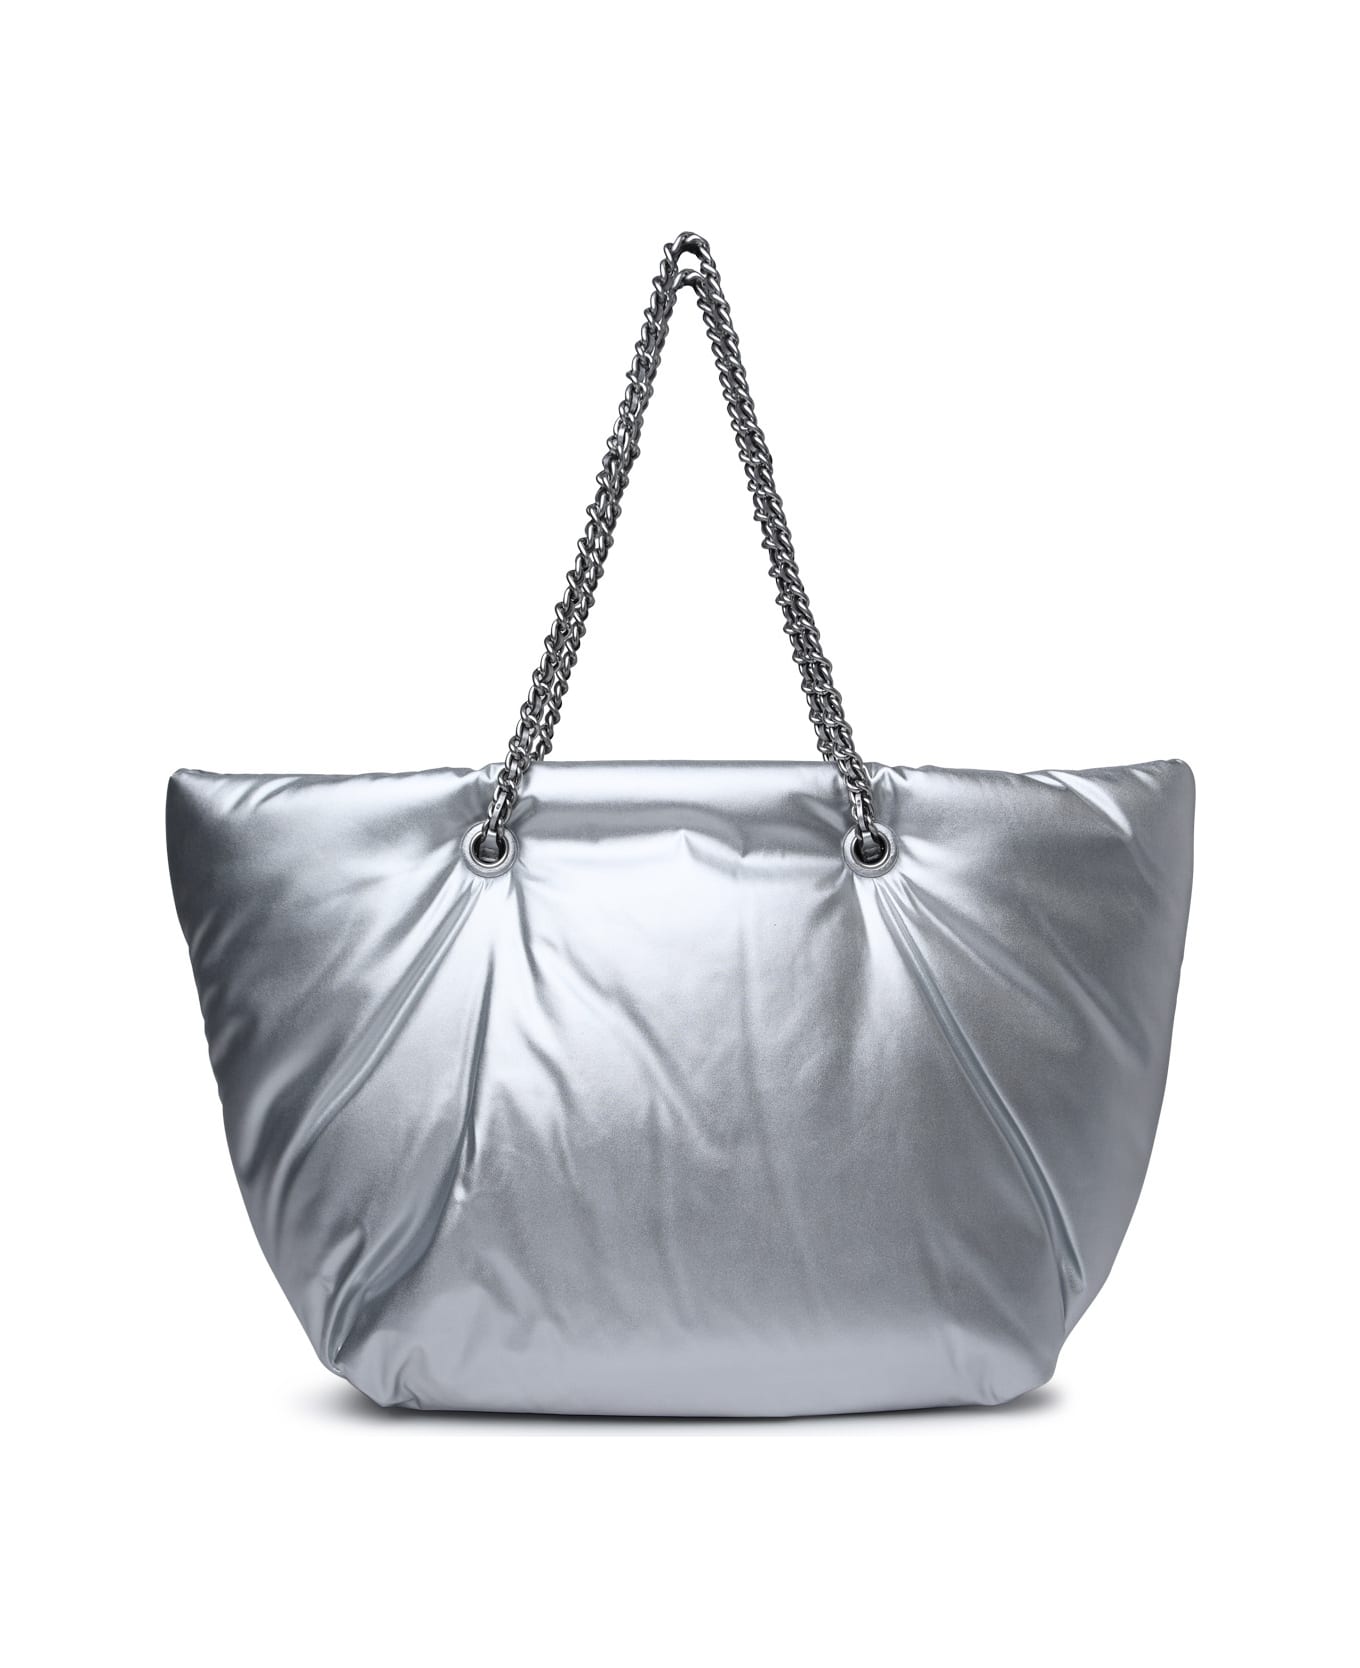 Tory Burch 'ella' Silver Polyester Shopping Bag - Argento